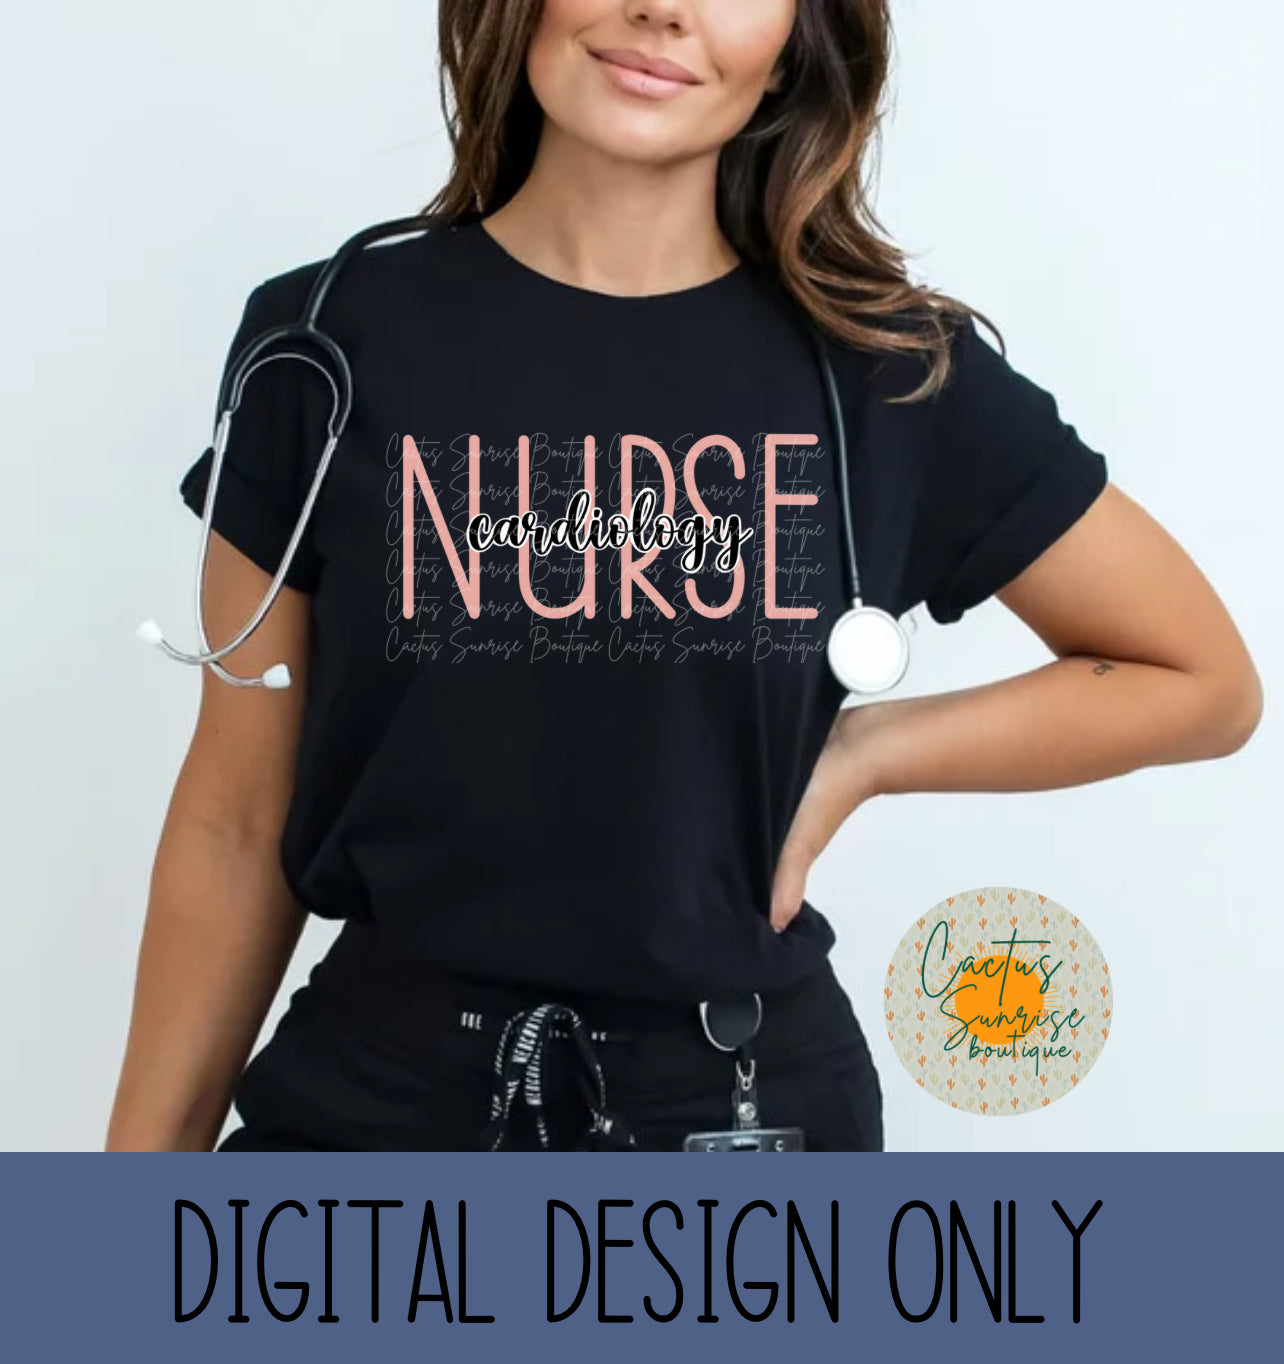 Cardiology Nurse Peach Digital file- No physical product